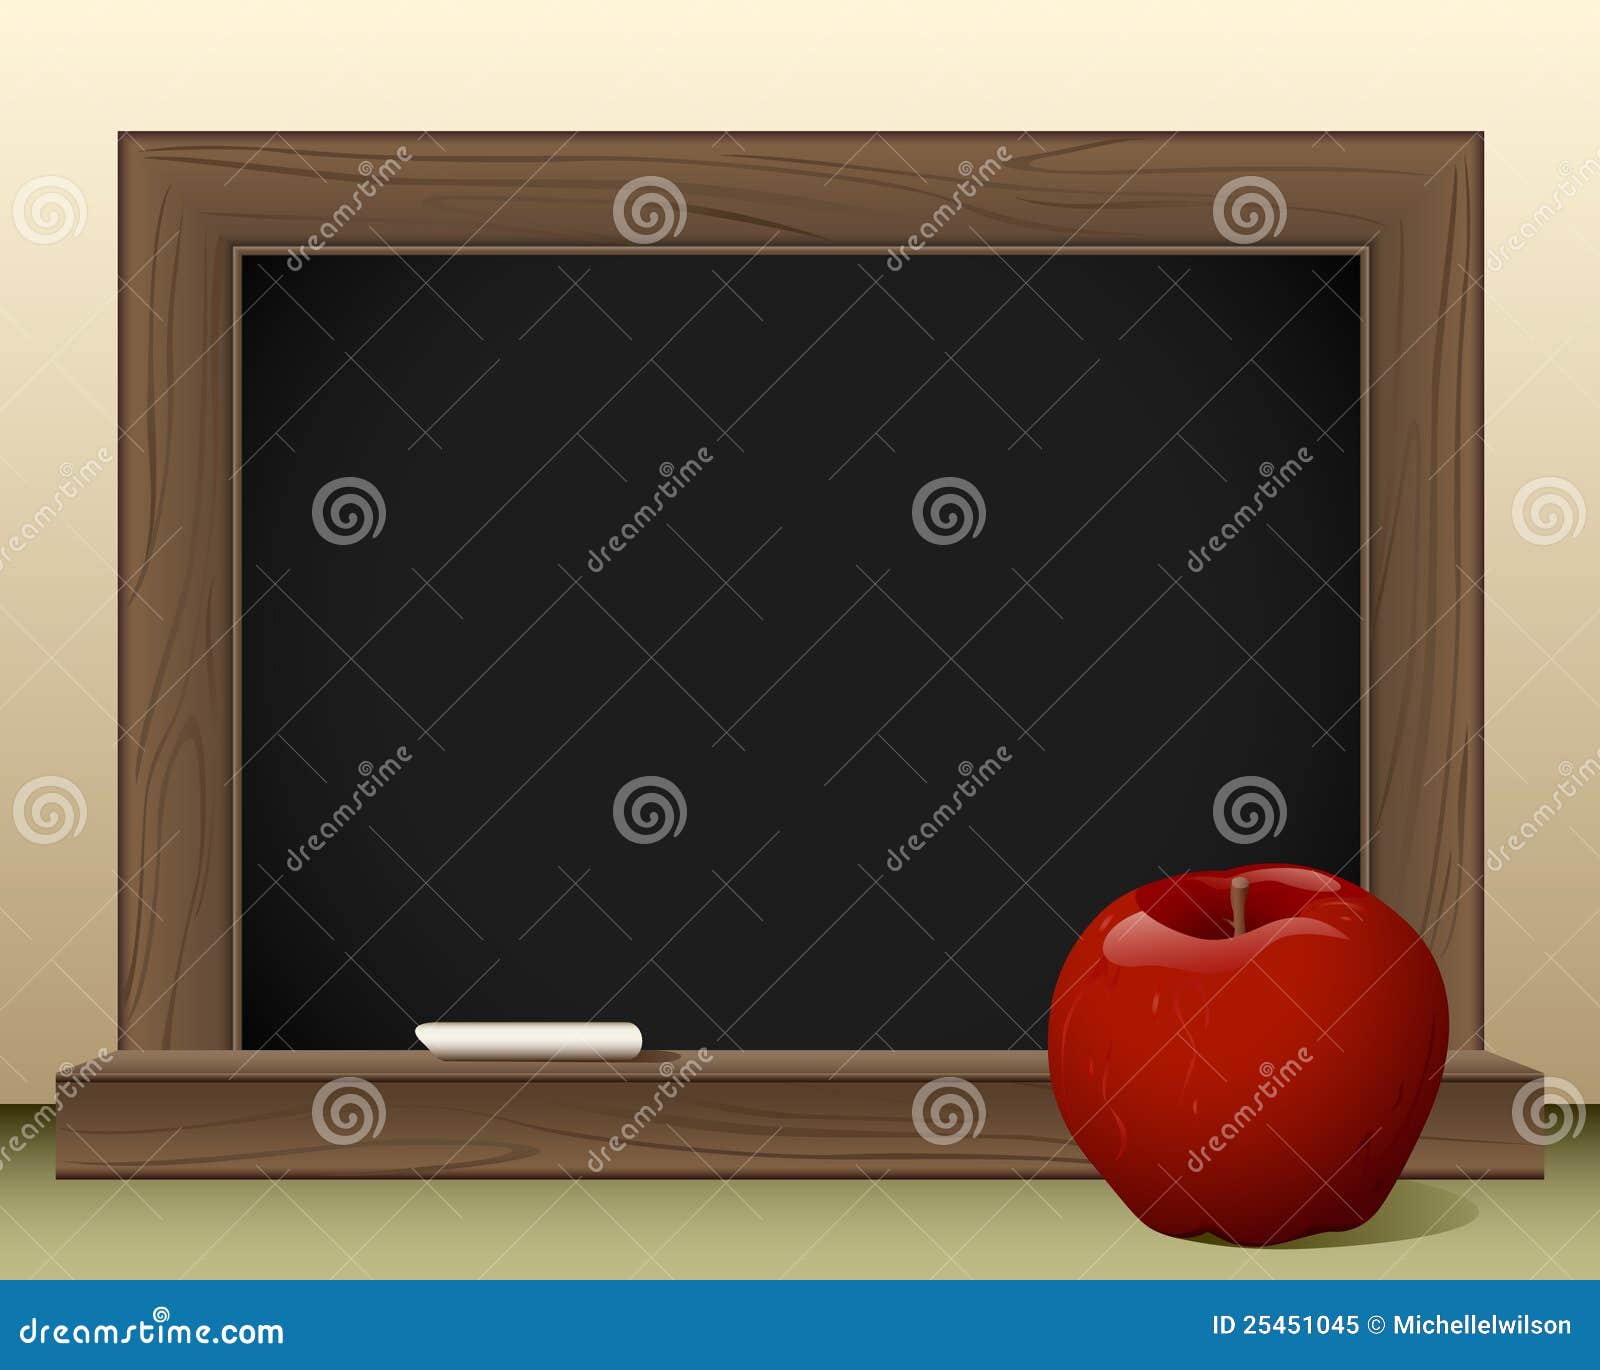 Chalkboard and apple stock vector. Illustration of blackboard - 254510451300 x 1130